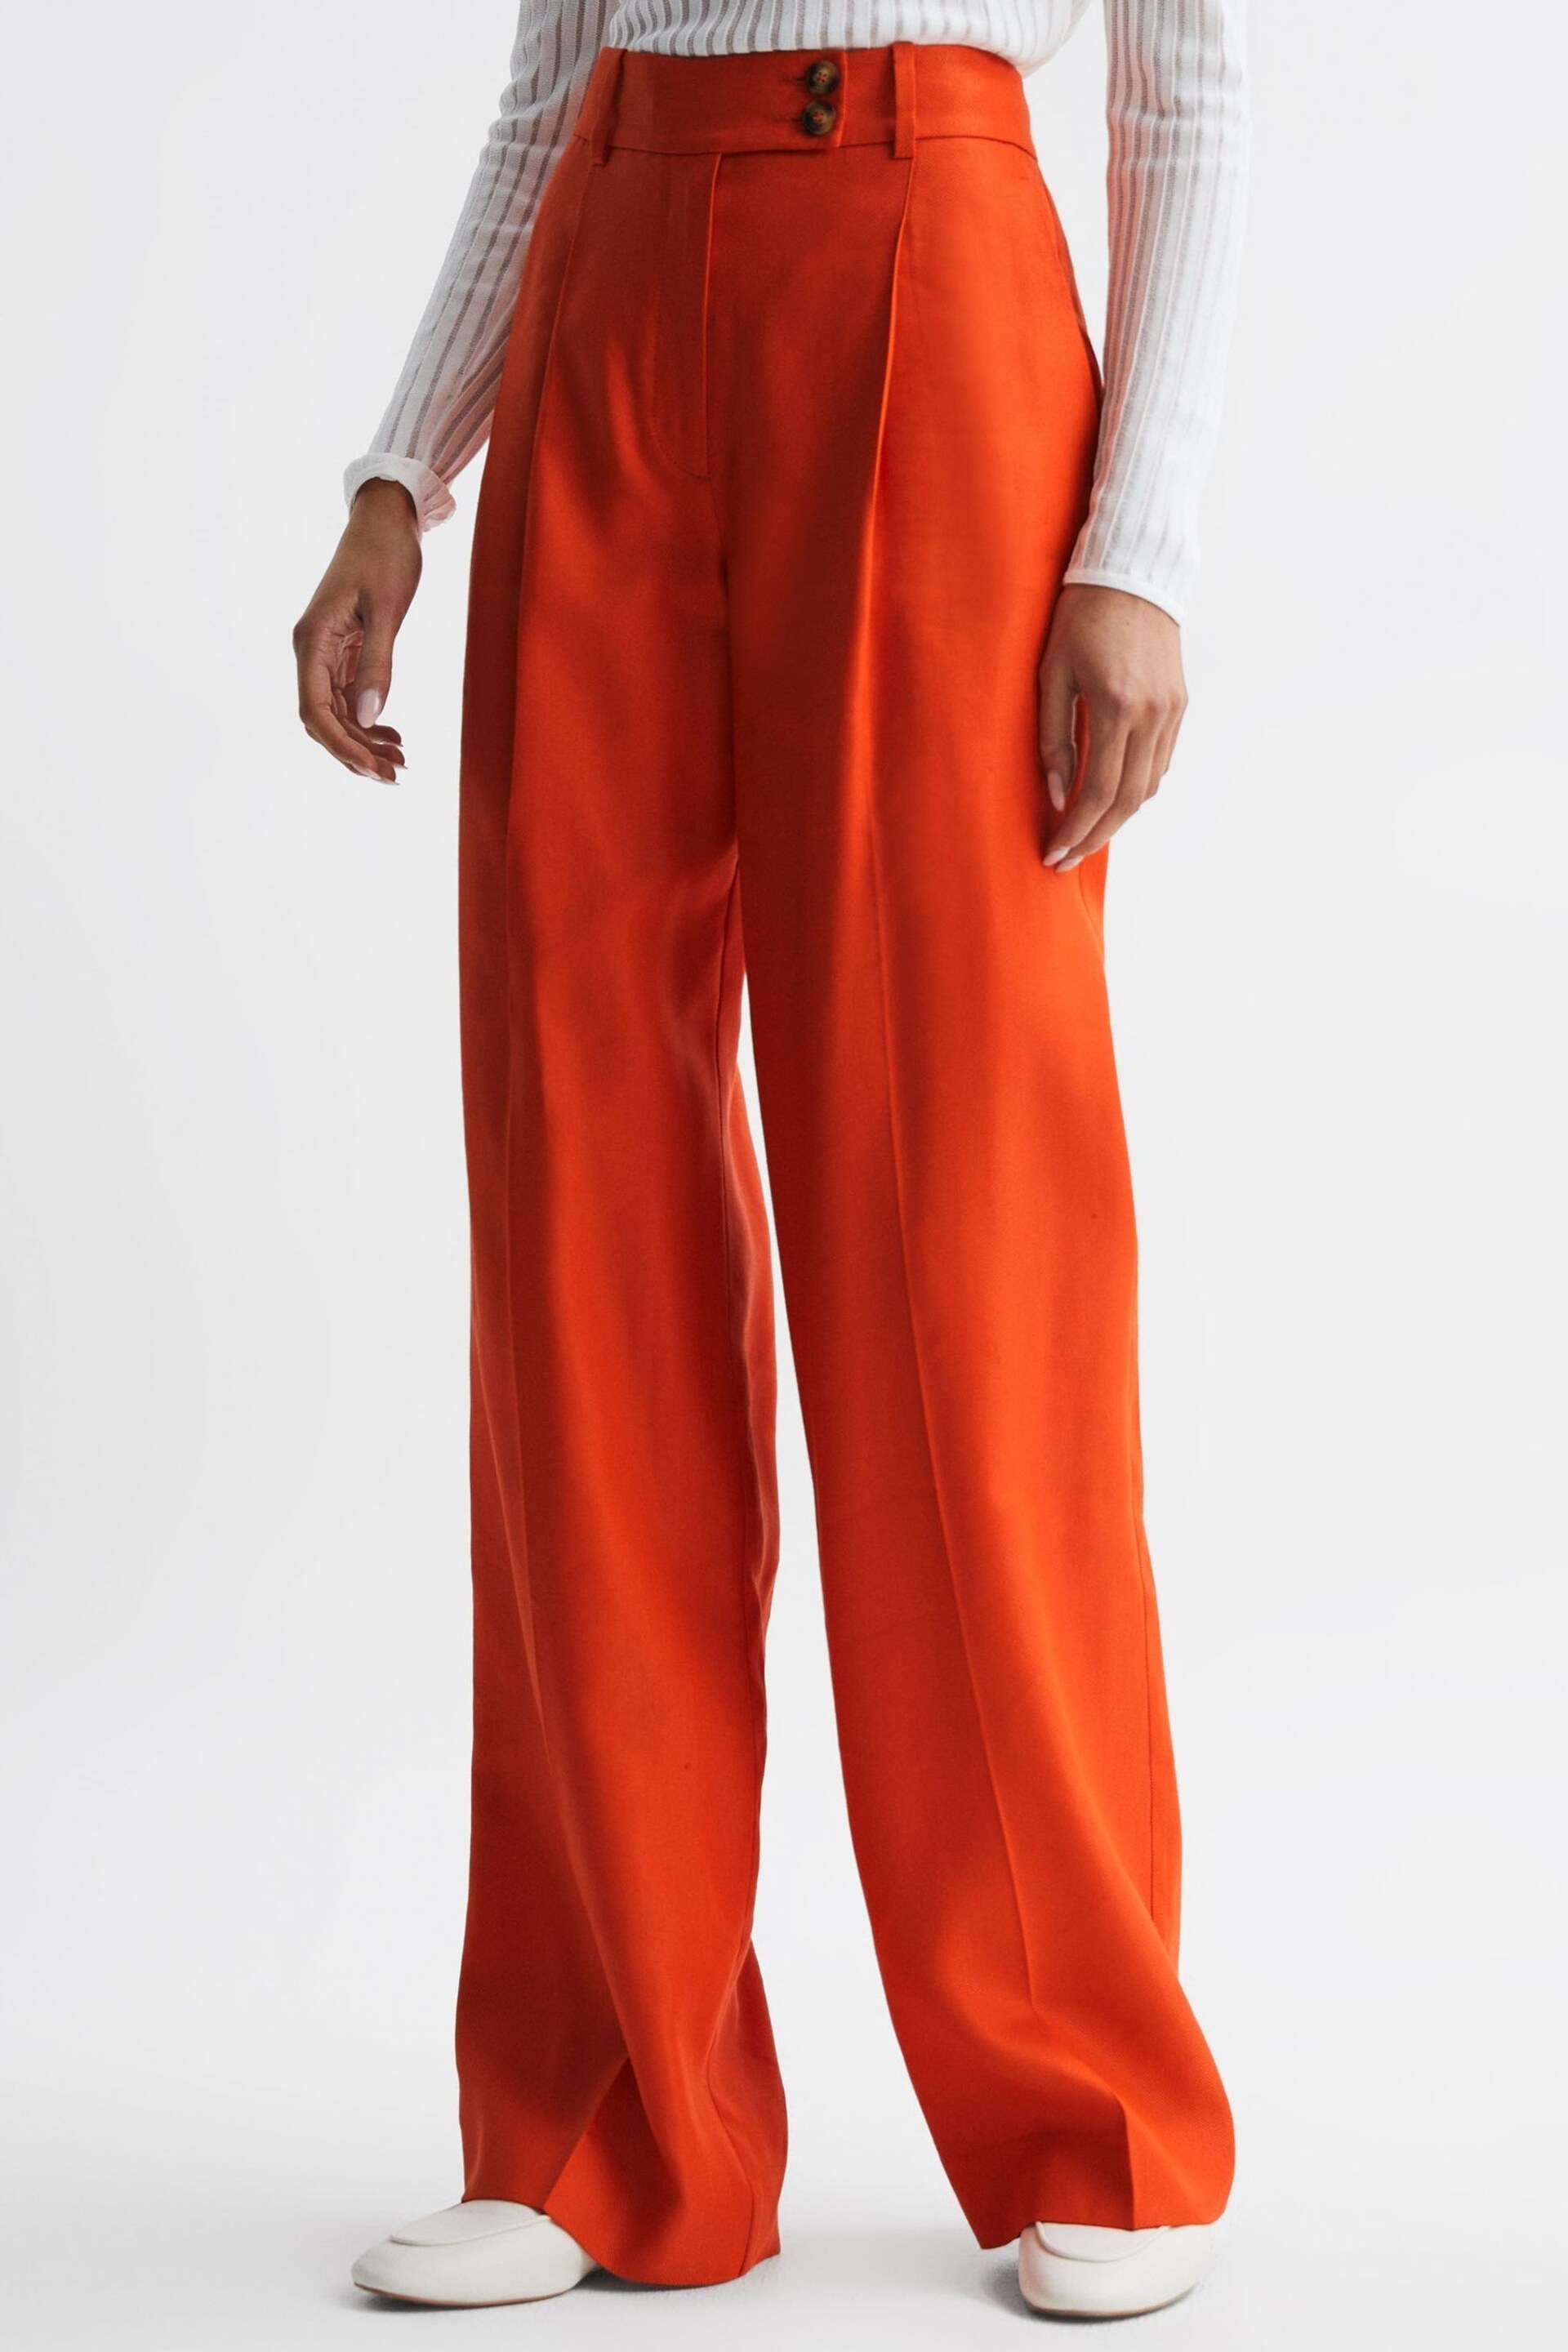 Reiss Orange Hollie Wide Leg Linen Trousers - Image 4 of 7